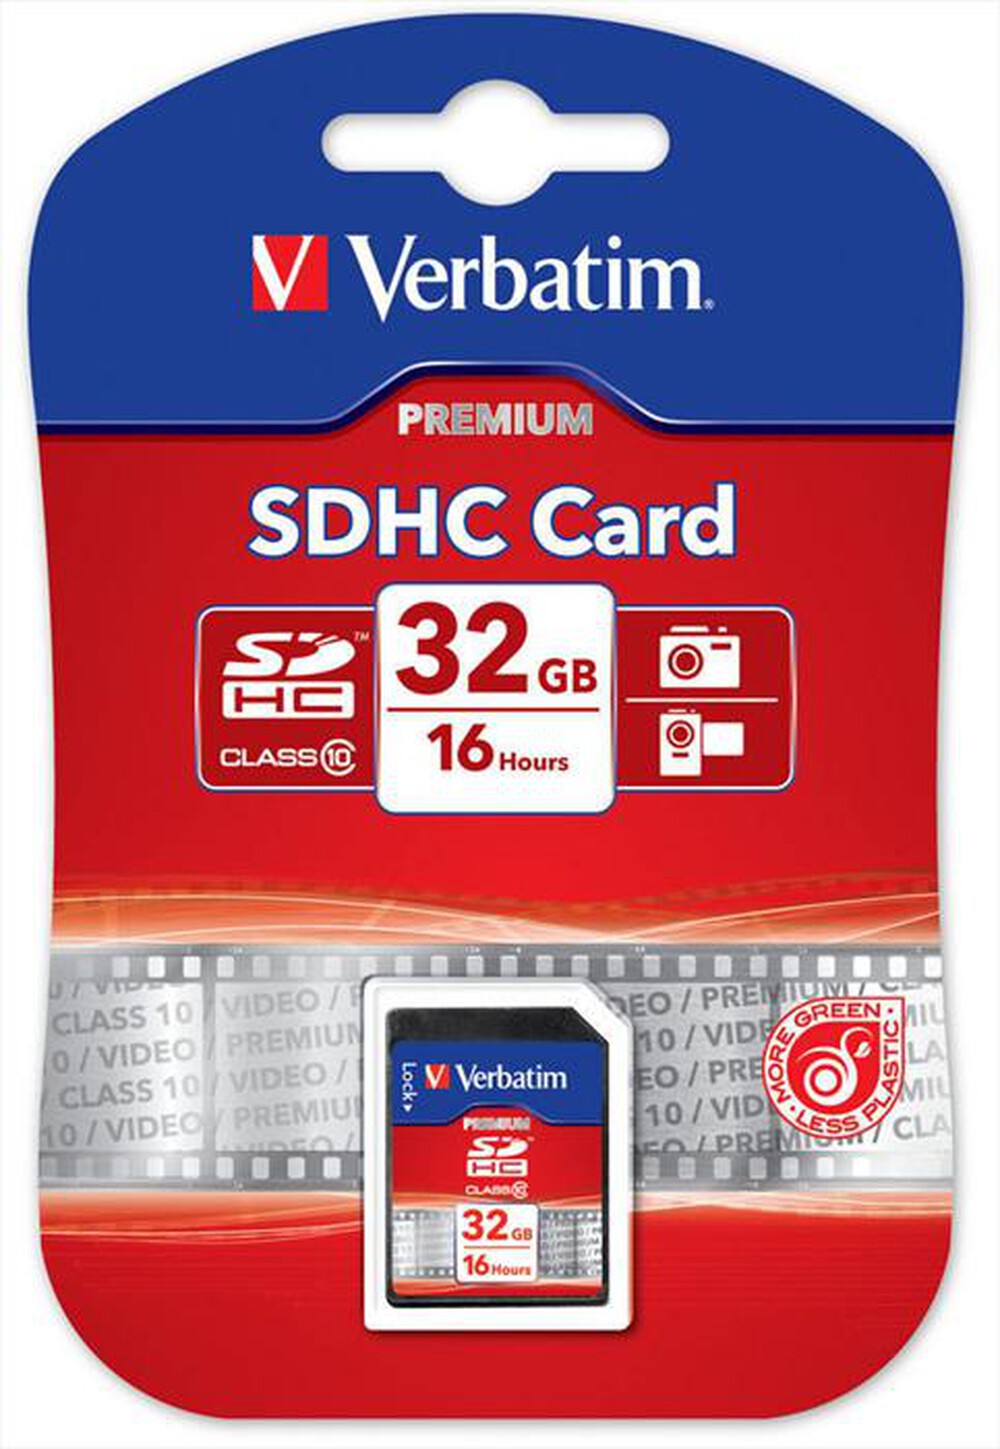 "VERBATIM - SDHC (Class 10) 32GB - "